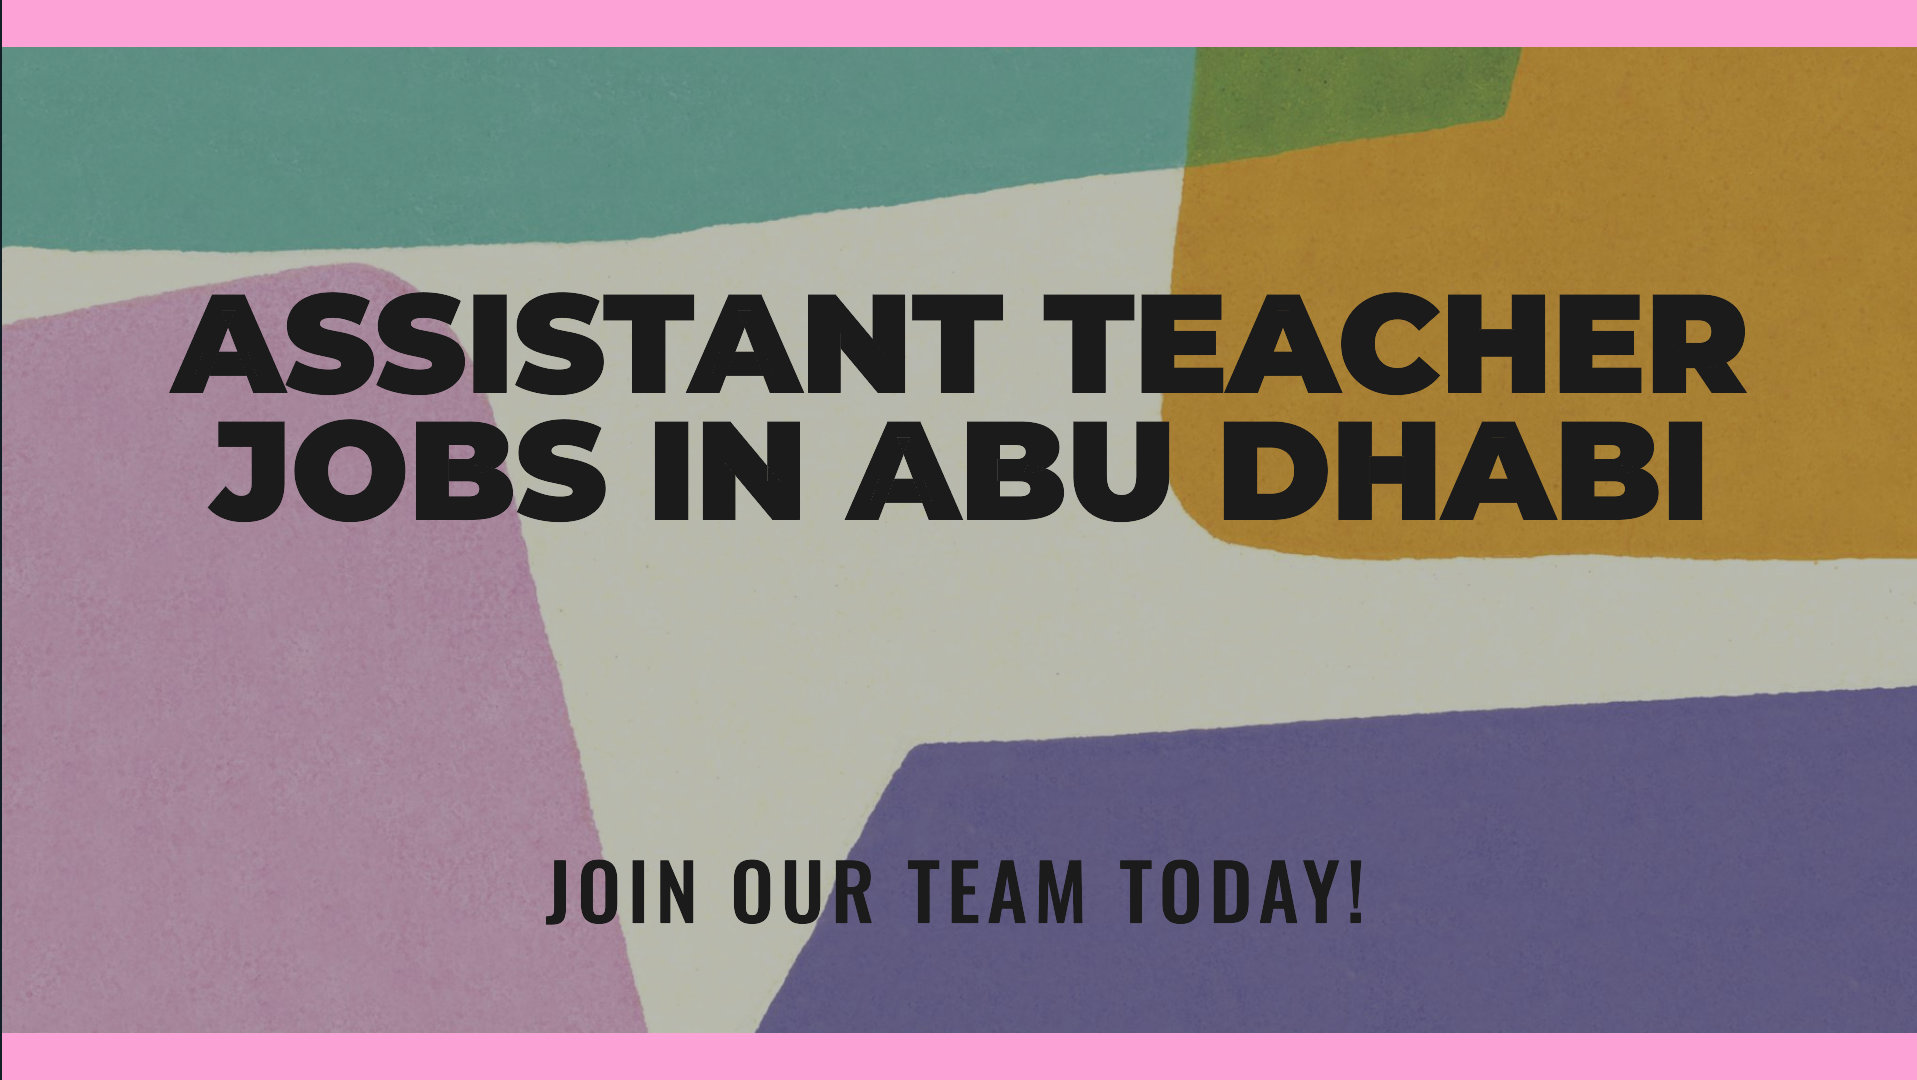 Assistant Teacher jobs in Abu Dhabi